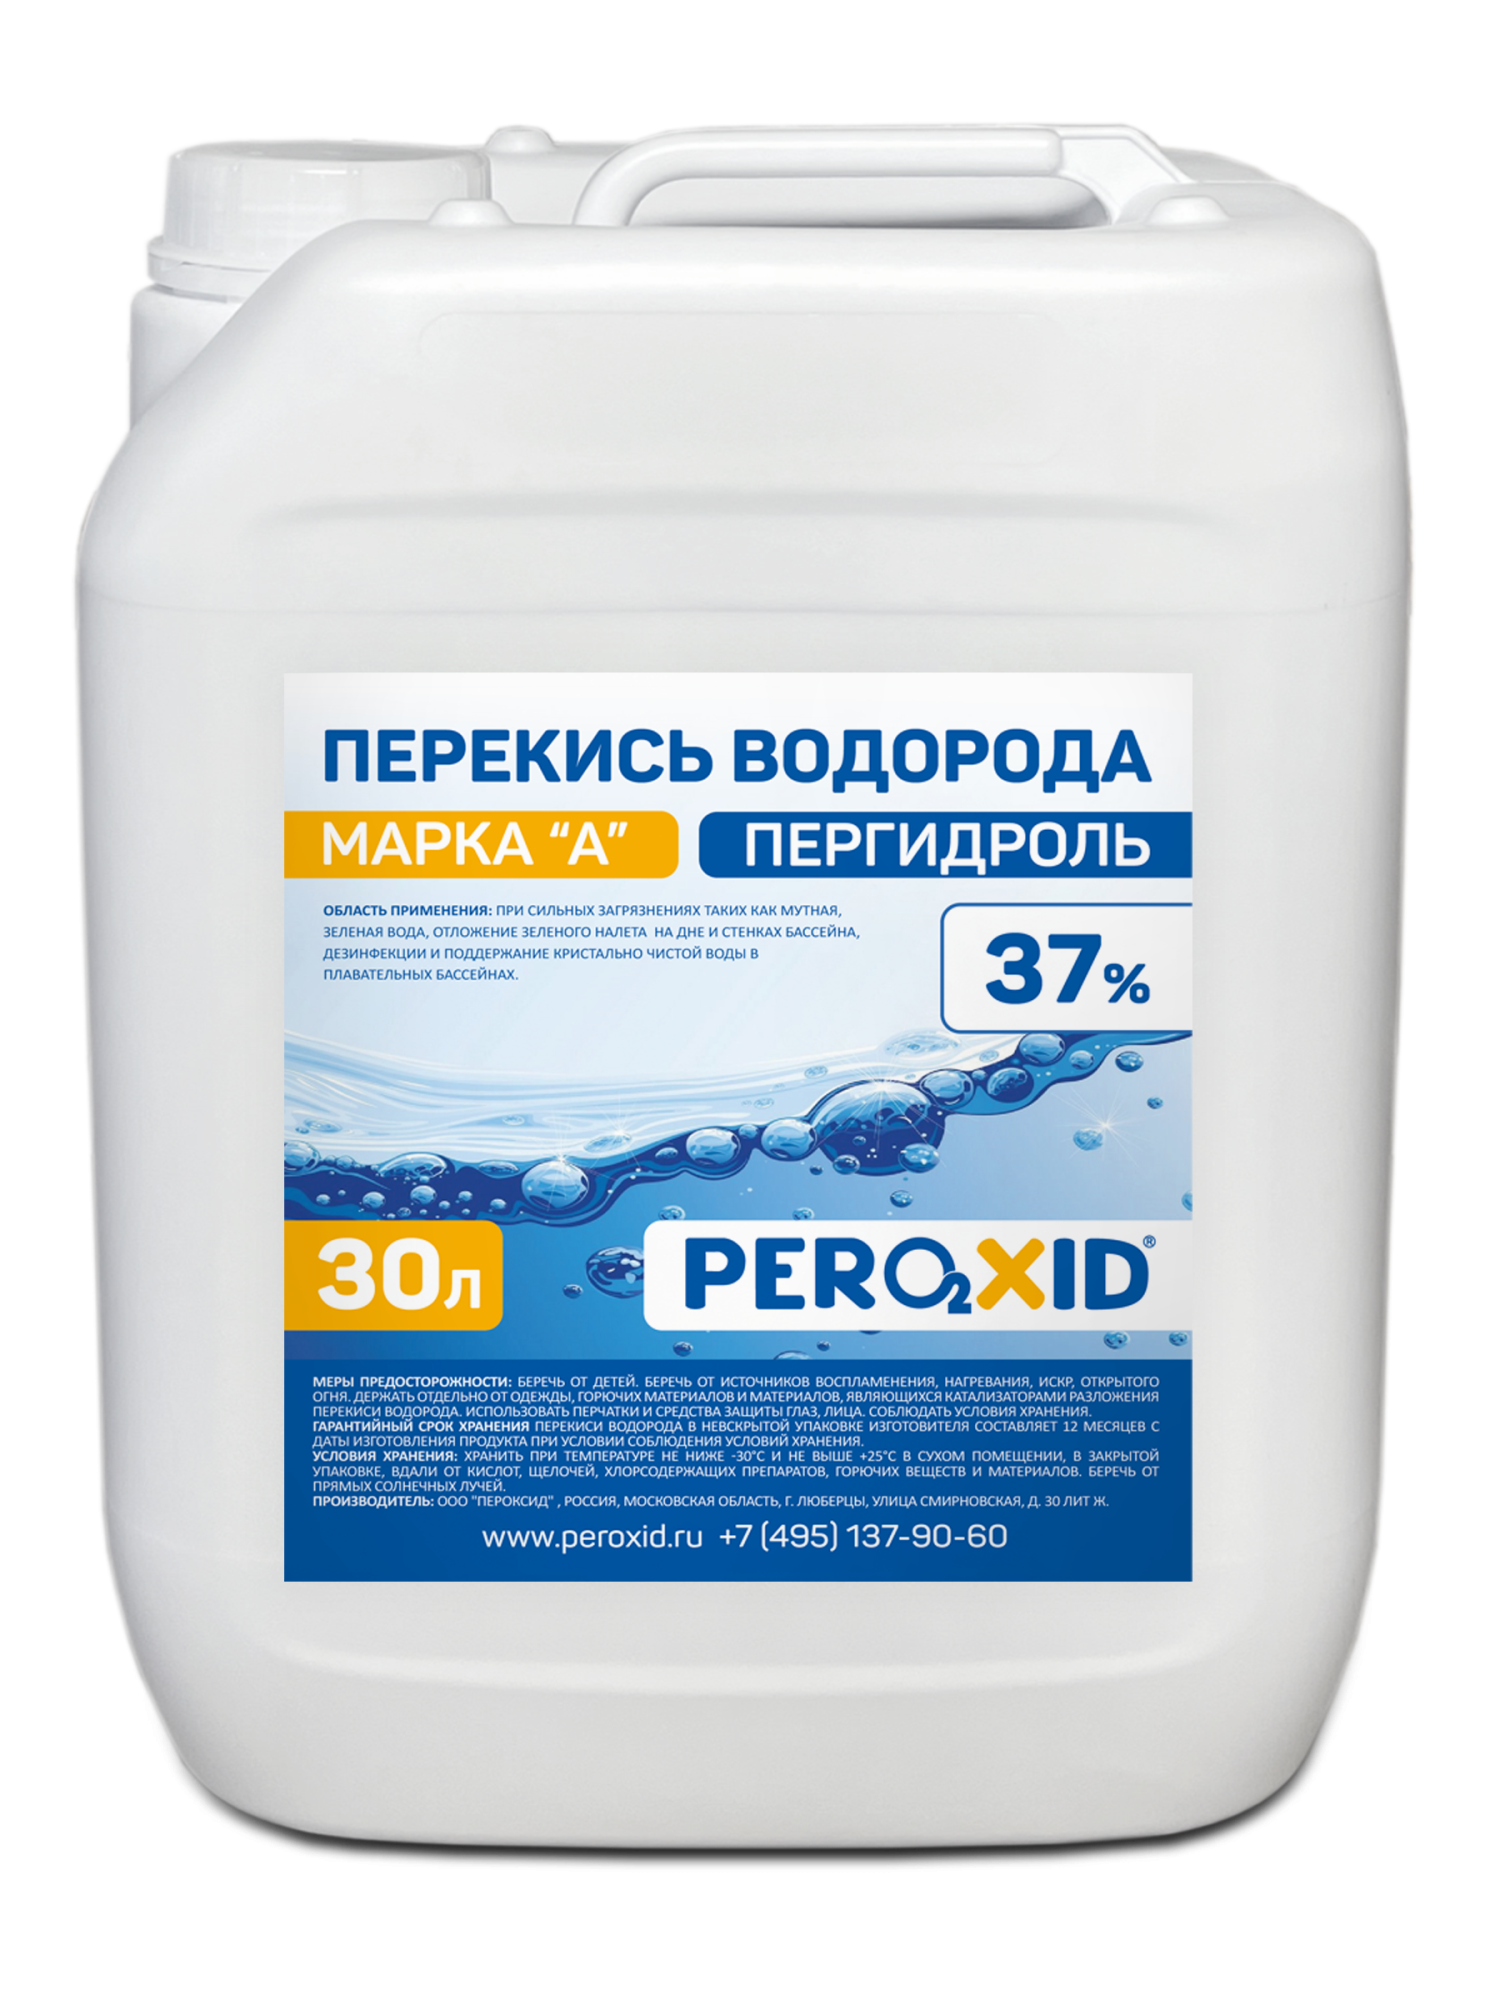 Перекись водорода (пергидроль) PEROXID 37% марка А ГОСТ 177-88 30 л/34 кг